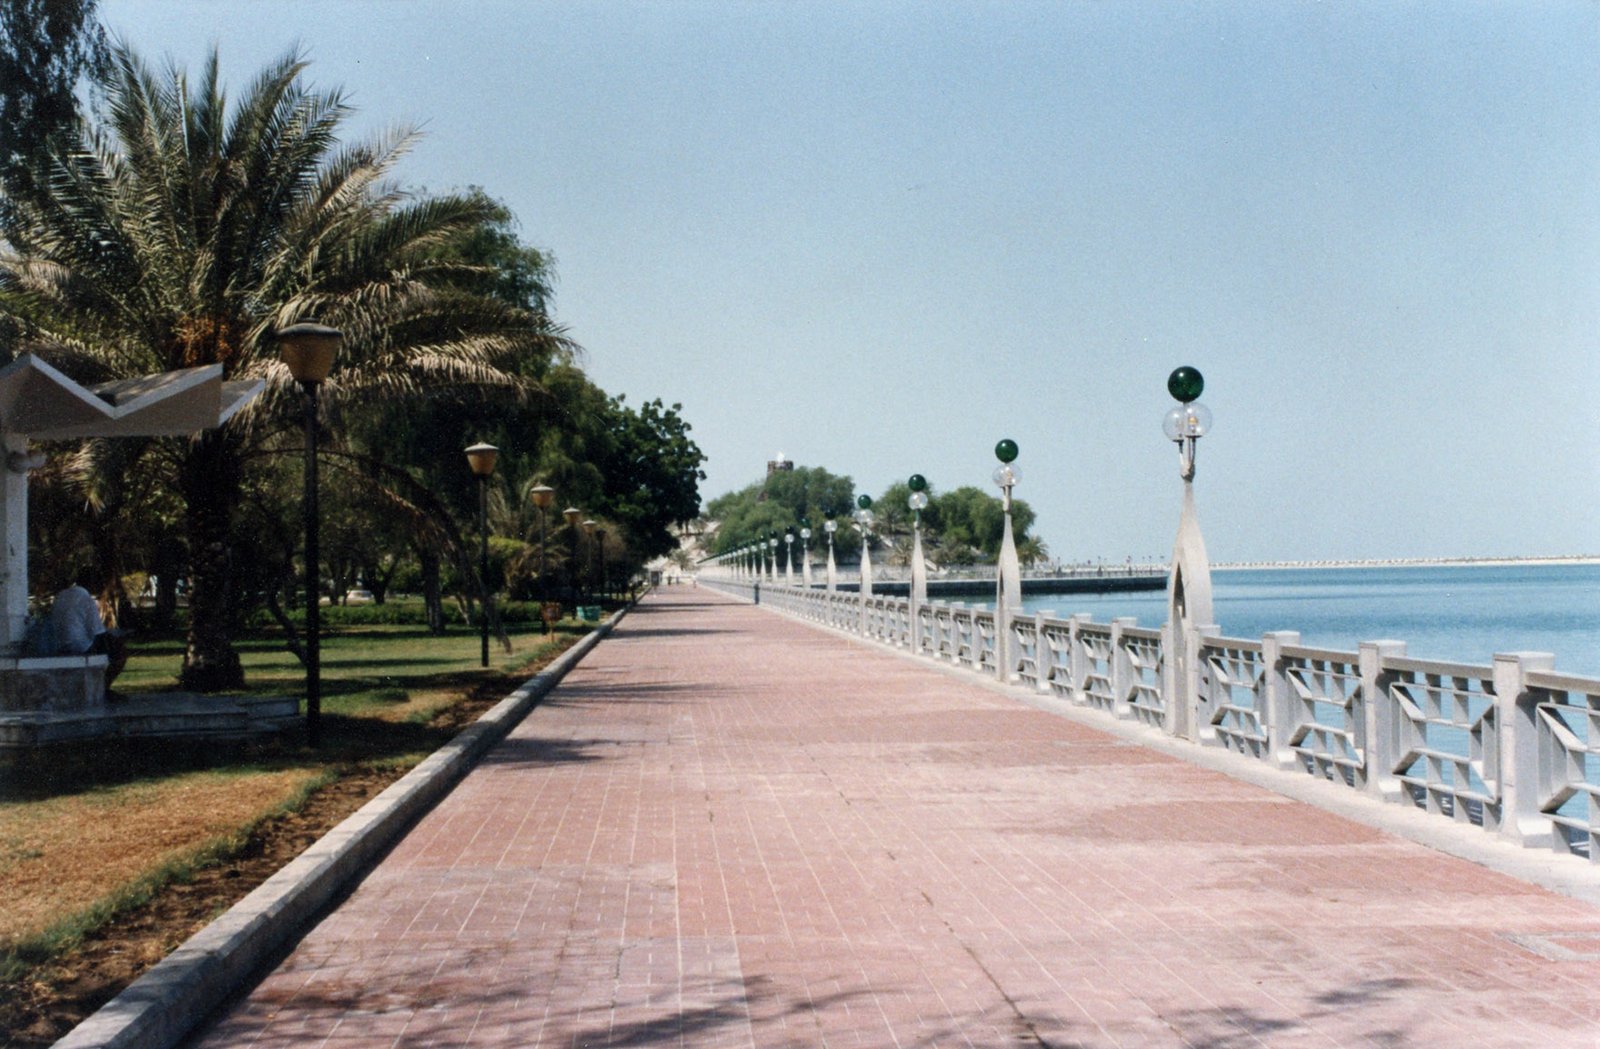 Abu Dhabi-02: Corniche Road